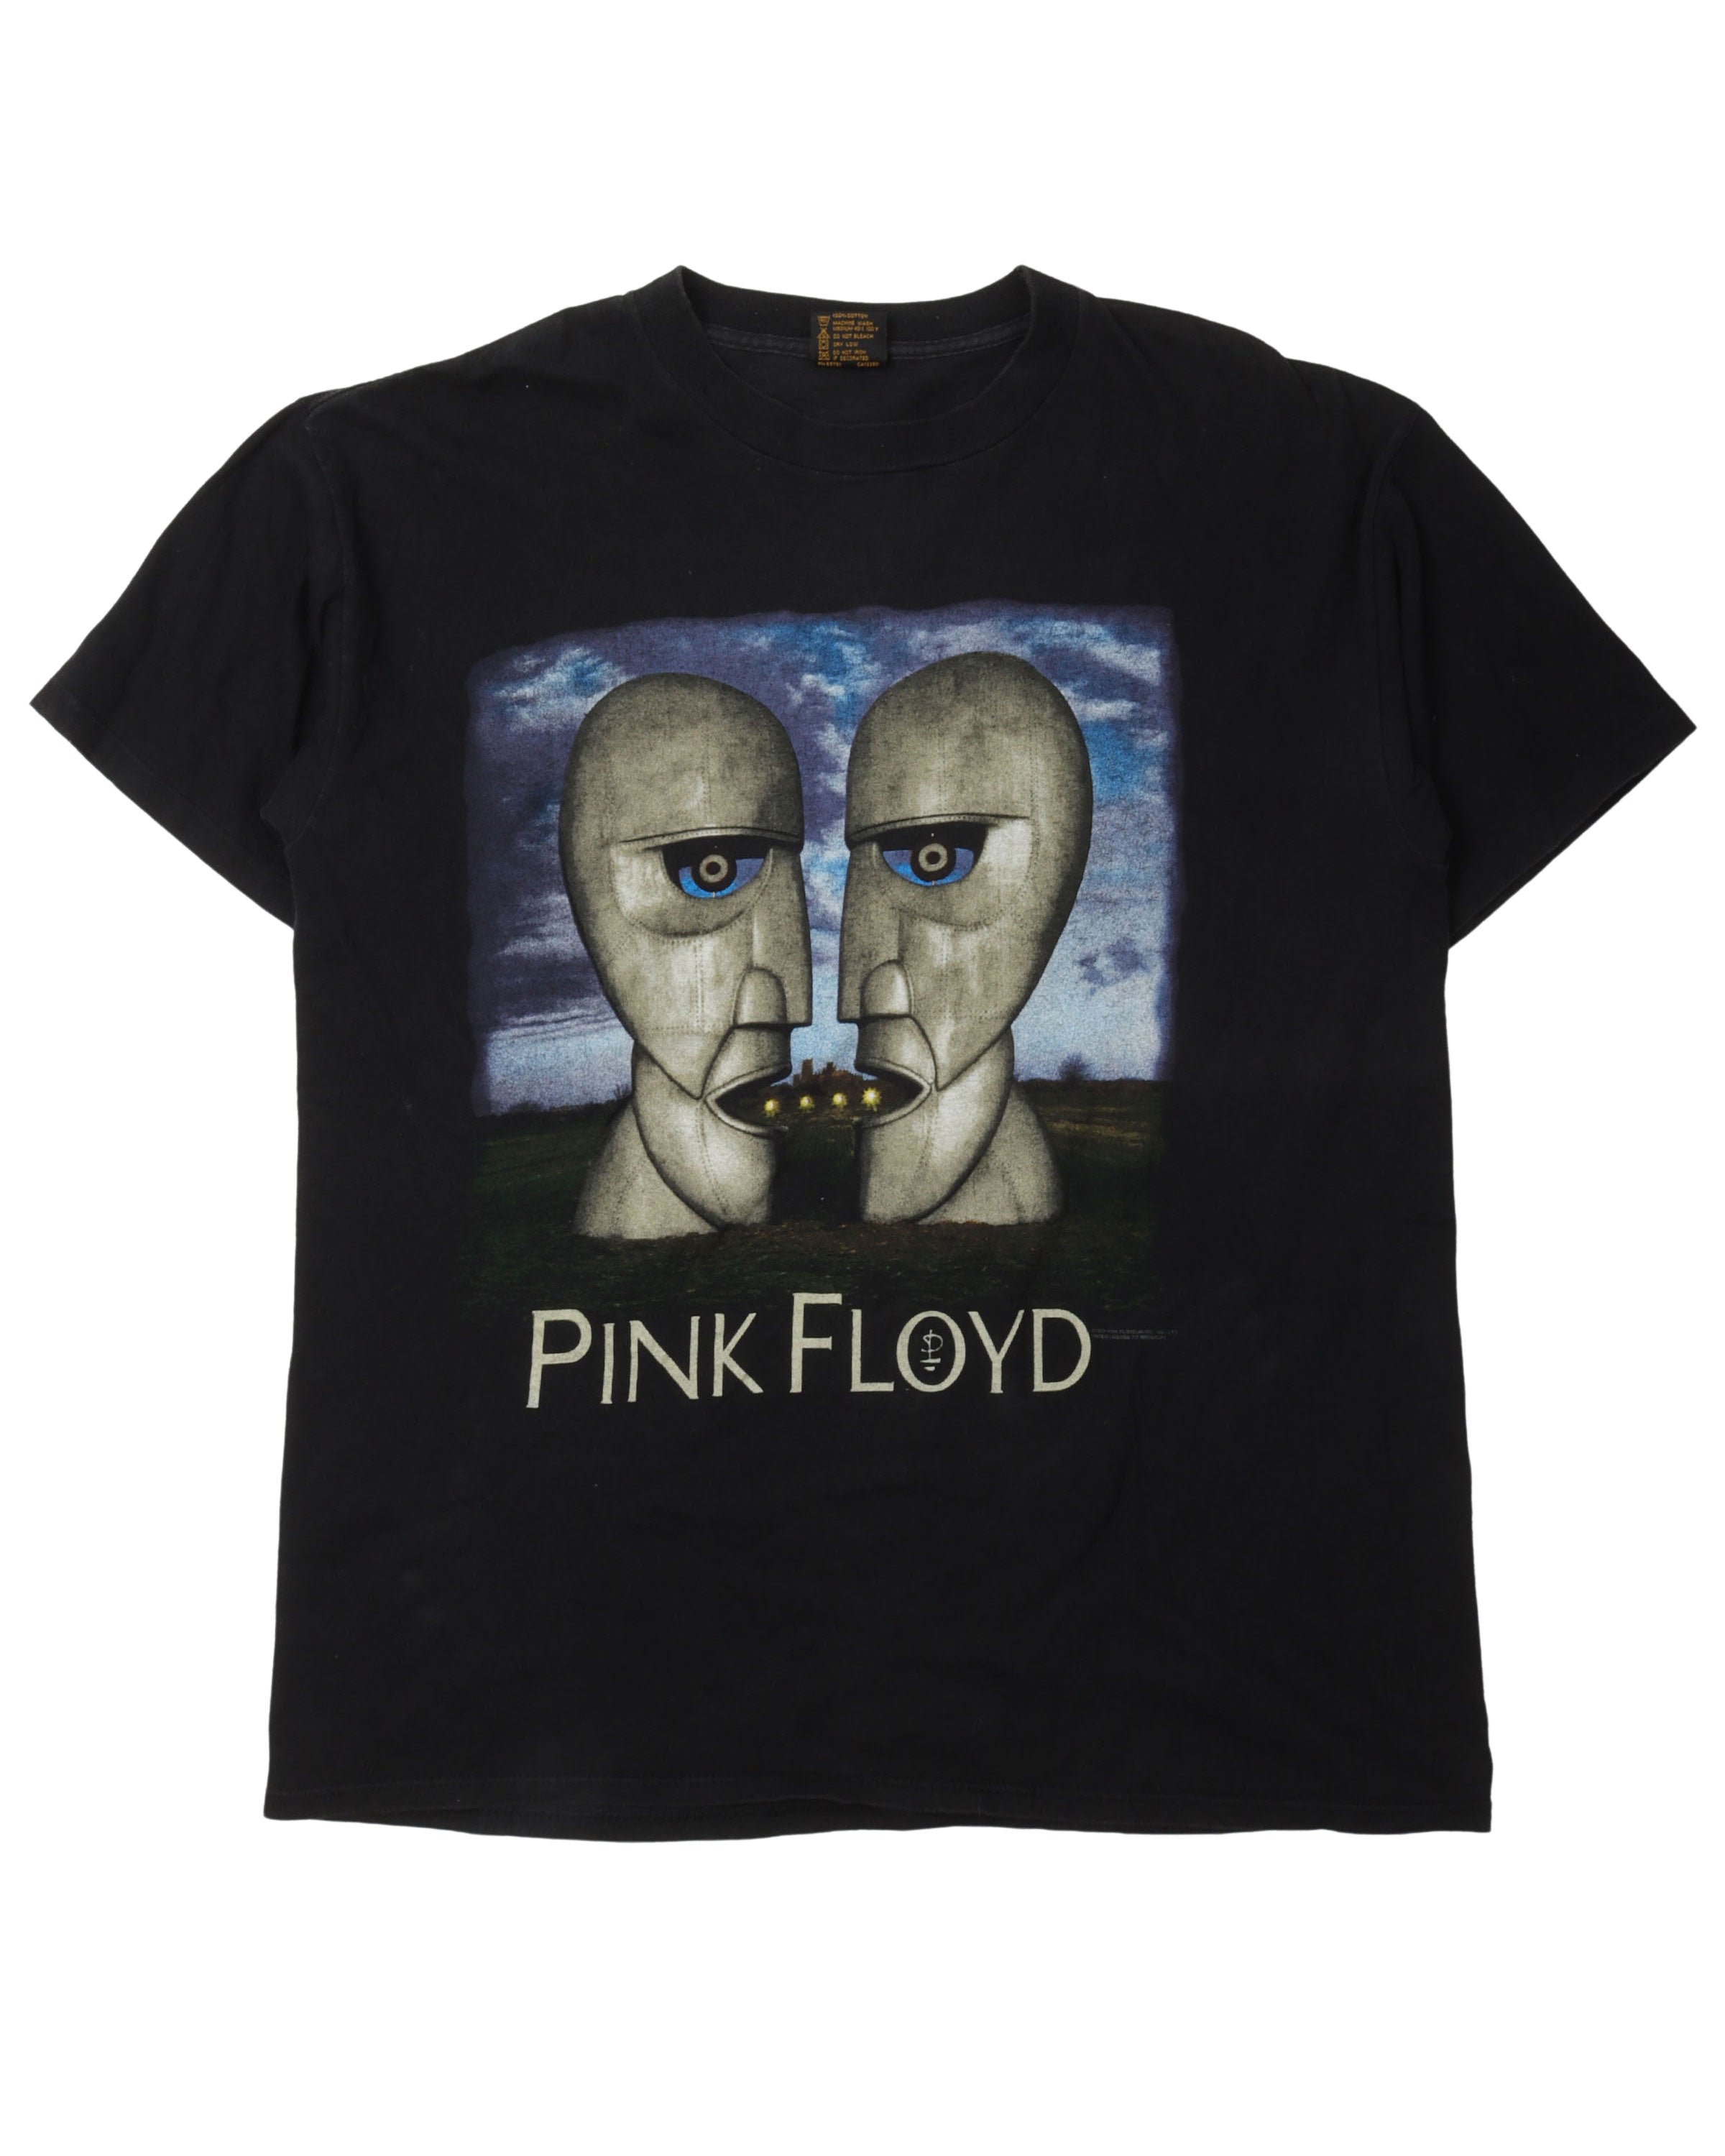 Pink Floyd T-Shirt 1994 Vintage Tour